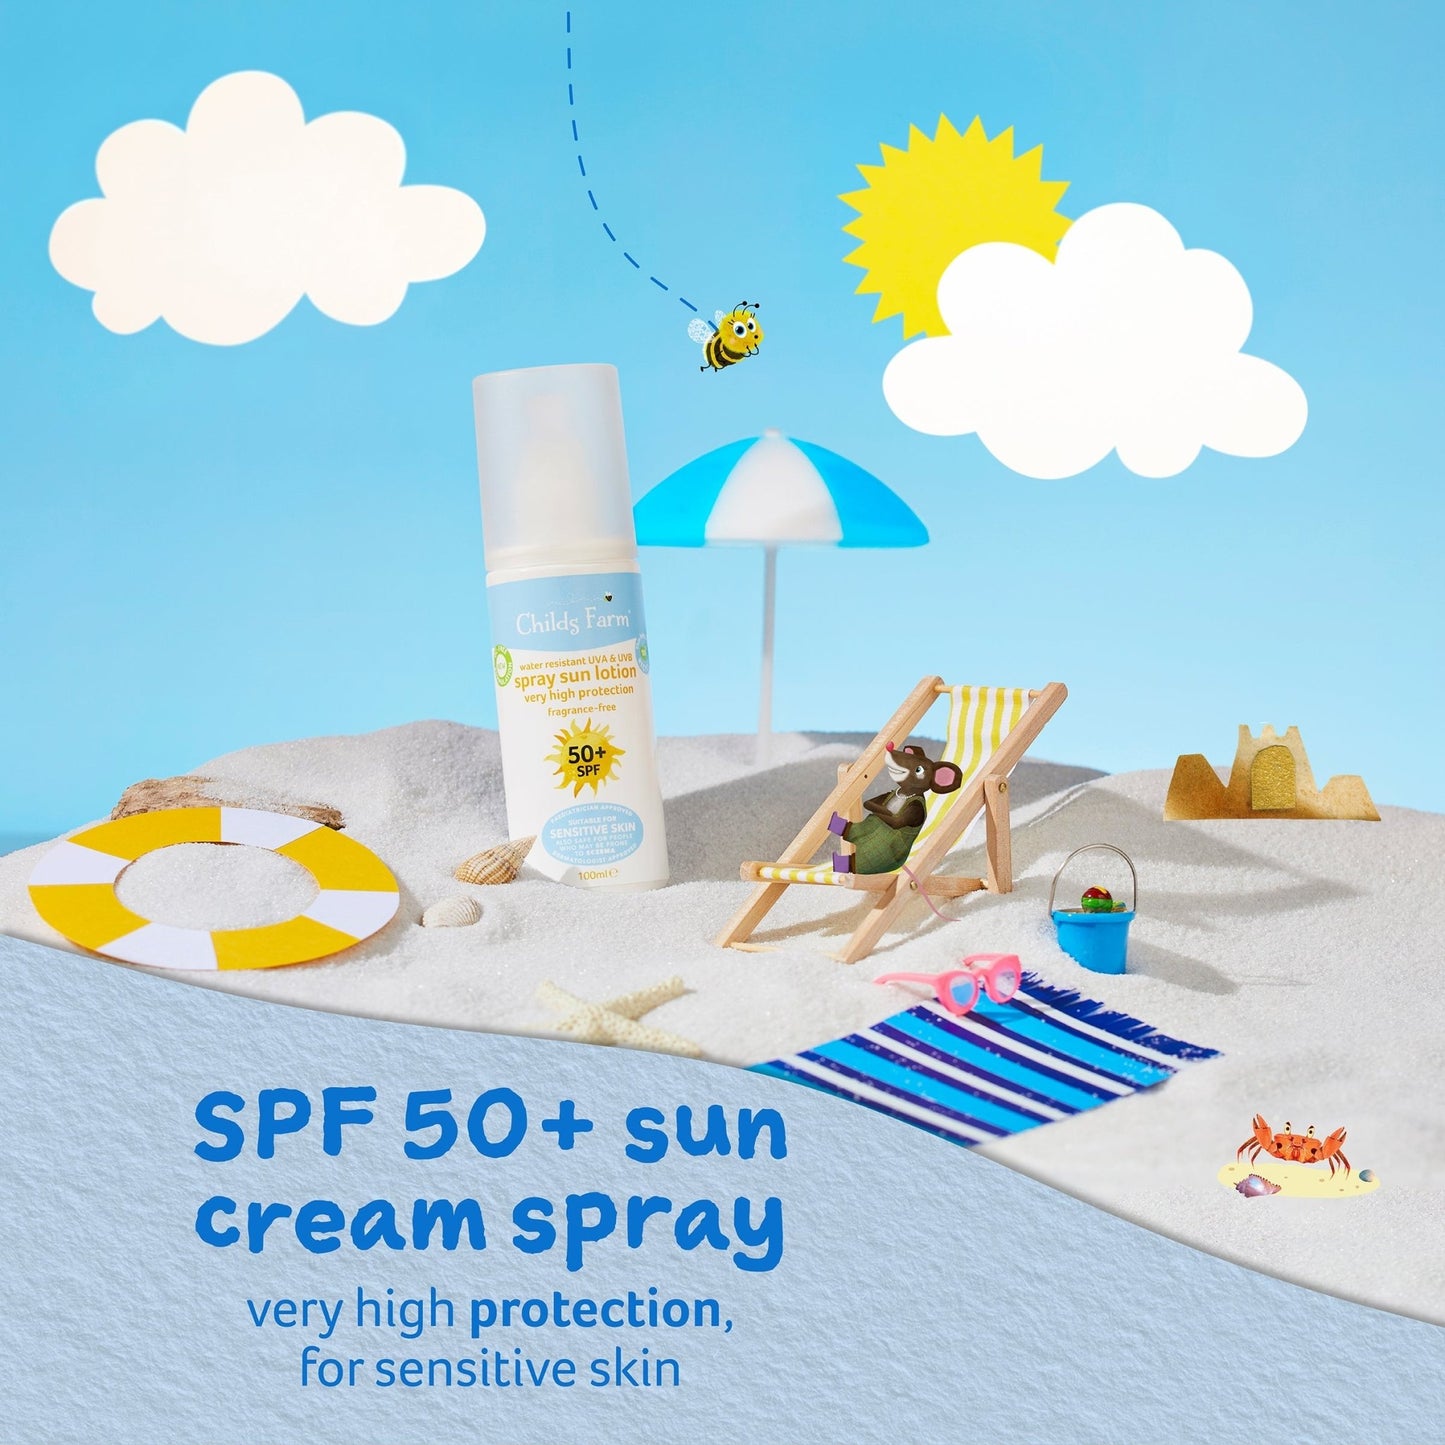 [STAFF] Childs Farm 50+ SPF sun lotion spray fragrance-free